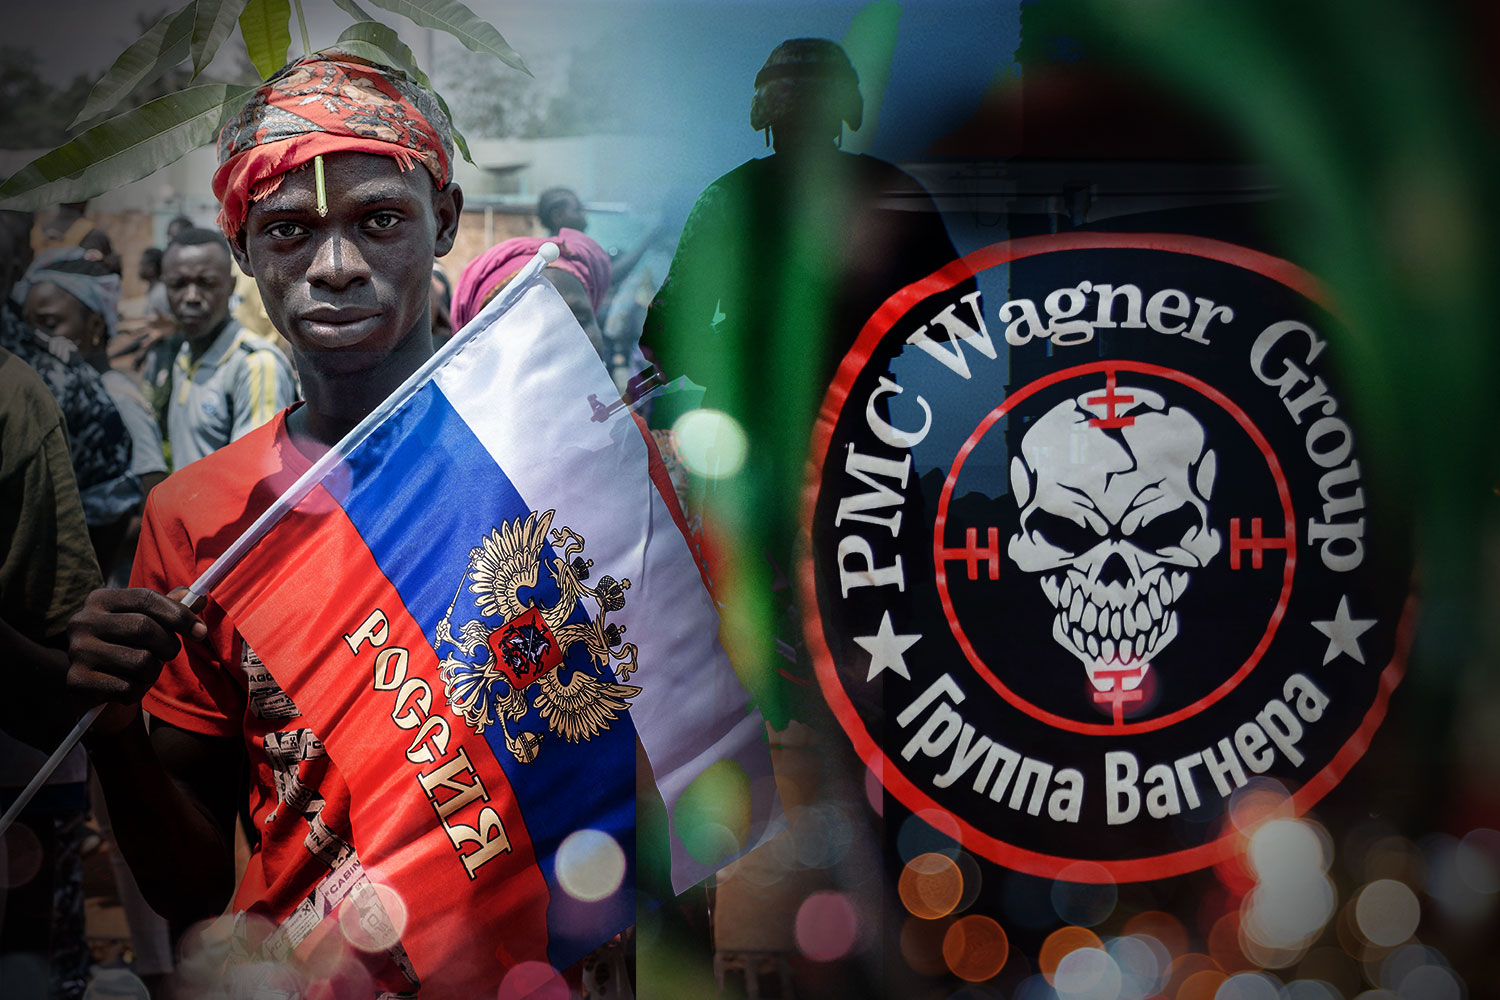 Diamond-rich African country is a zombie host for Kremlin’s mercenaries